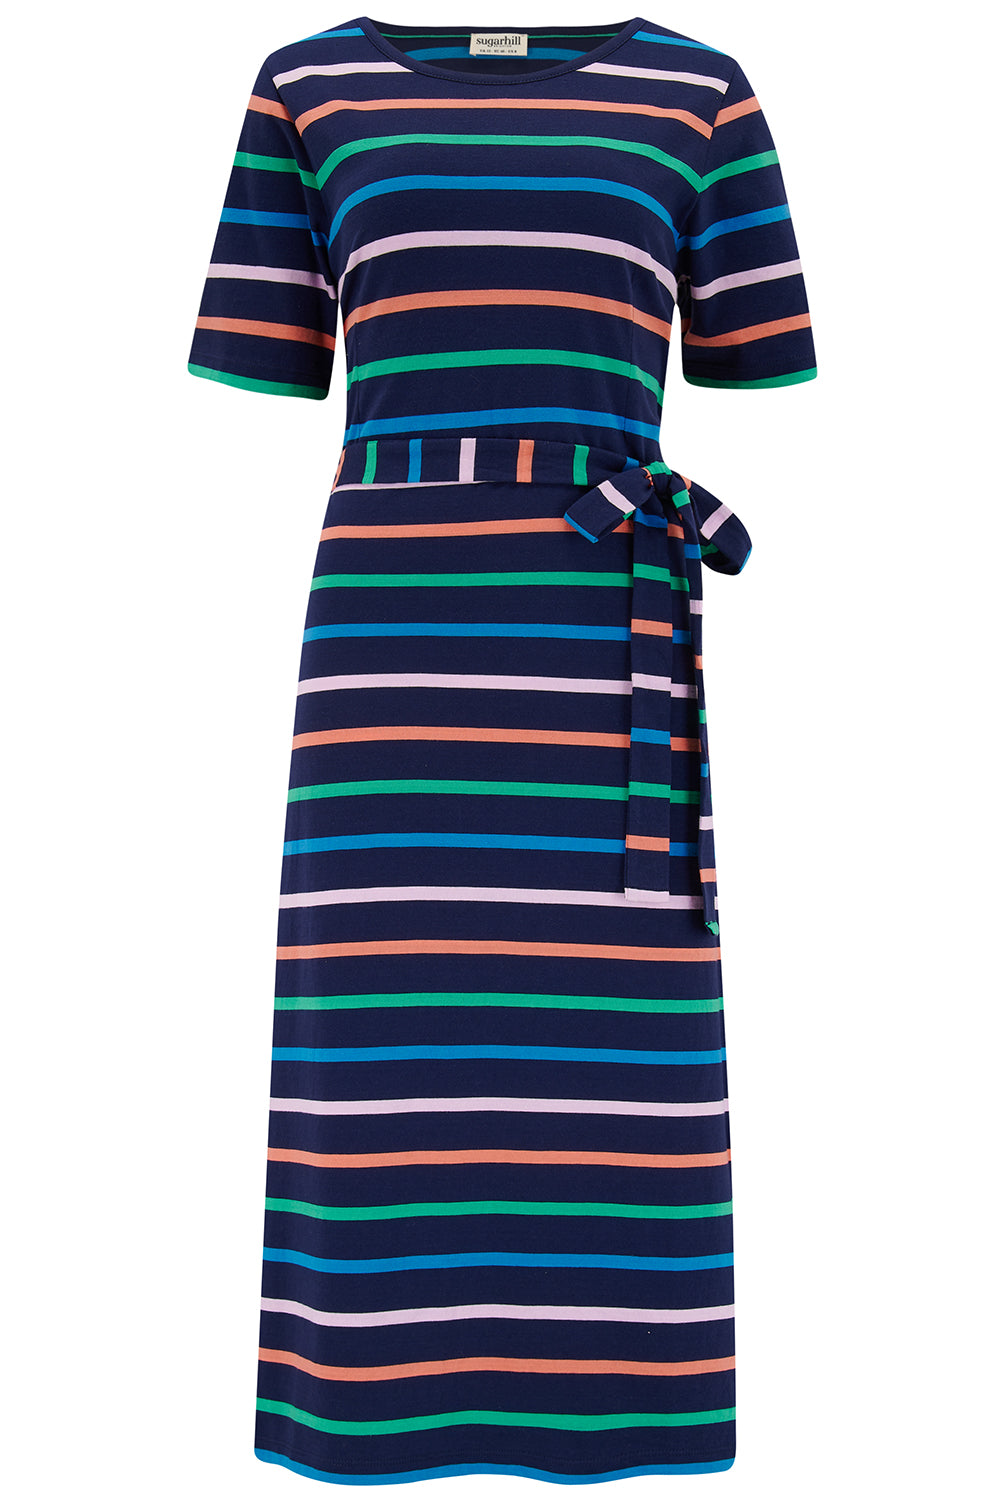 Sugarhill - Delanie Jersey Midi Dress - Navy Beach Stripes